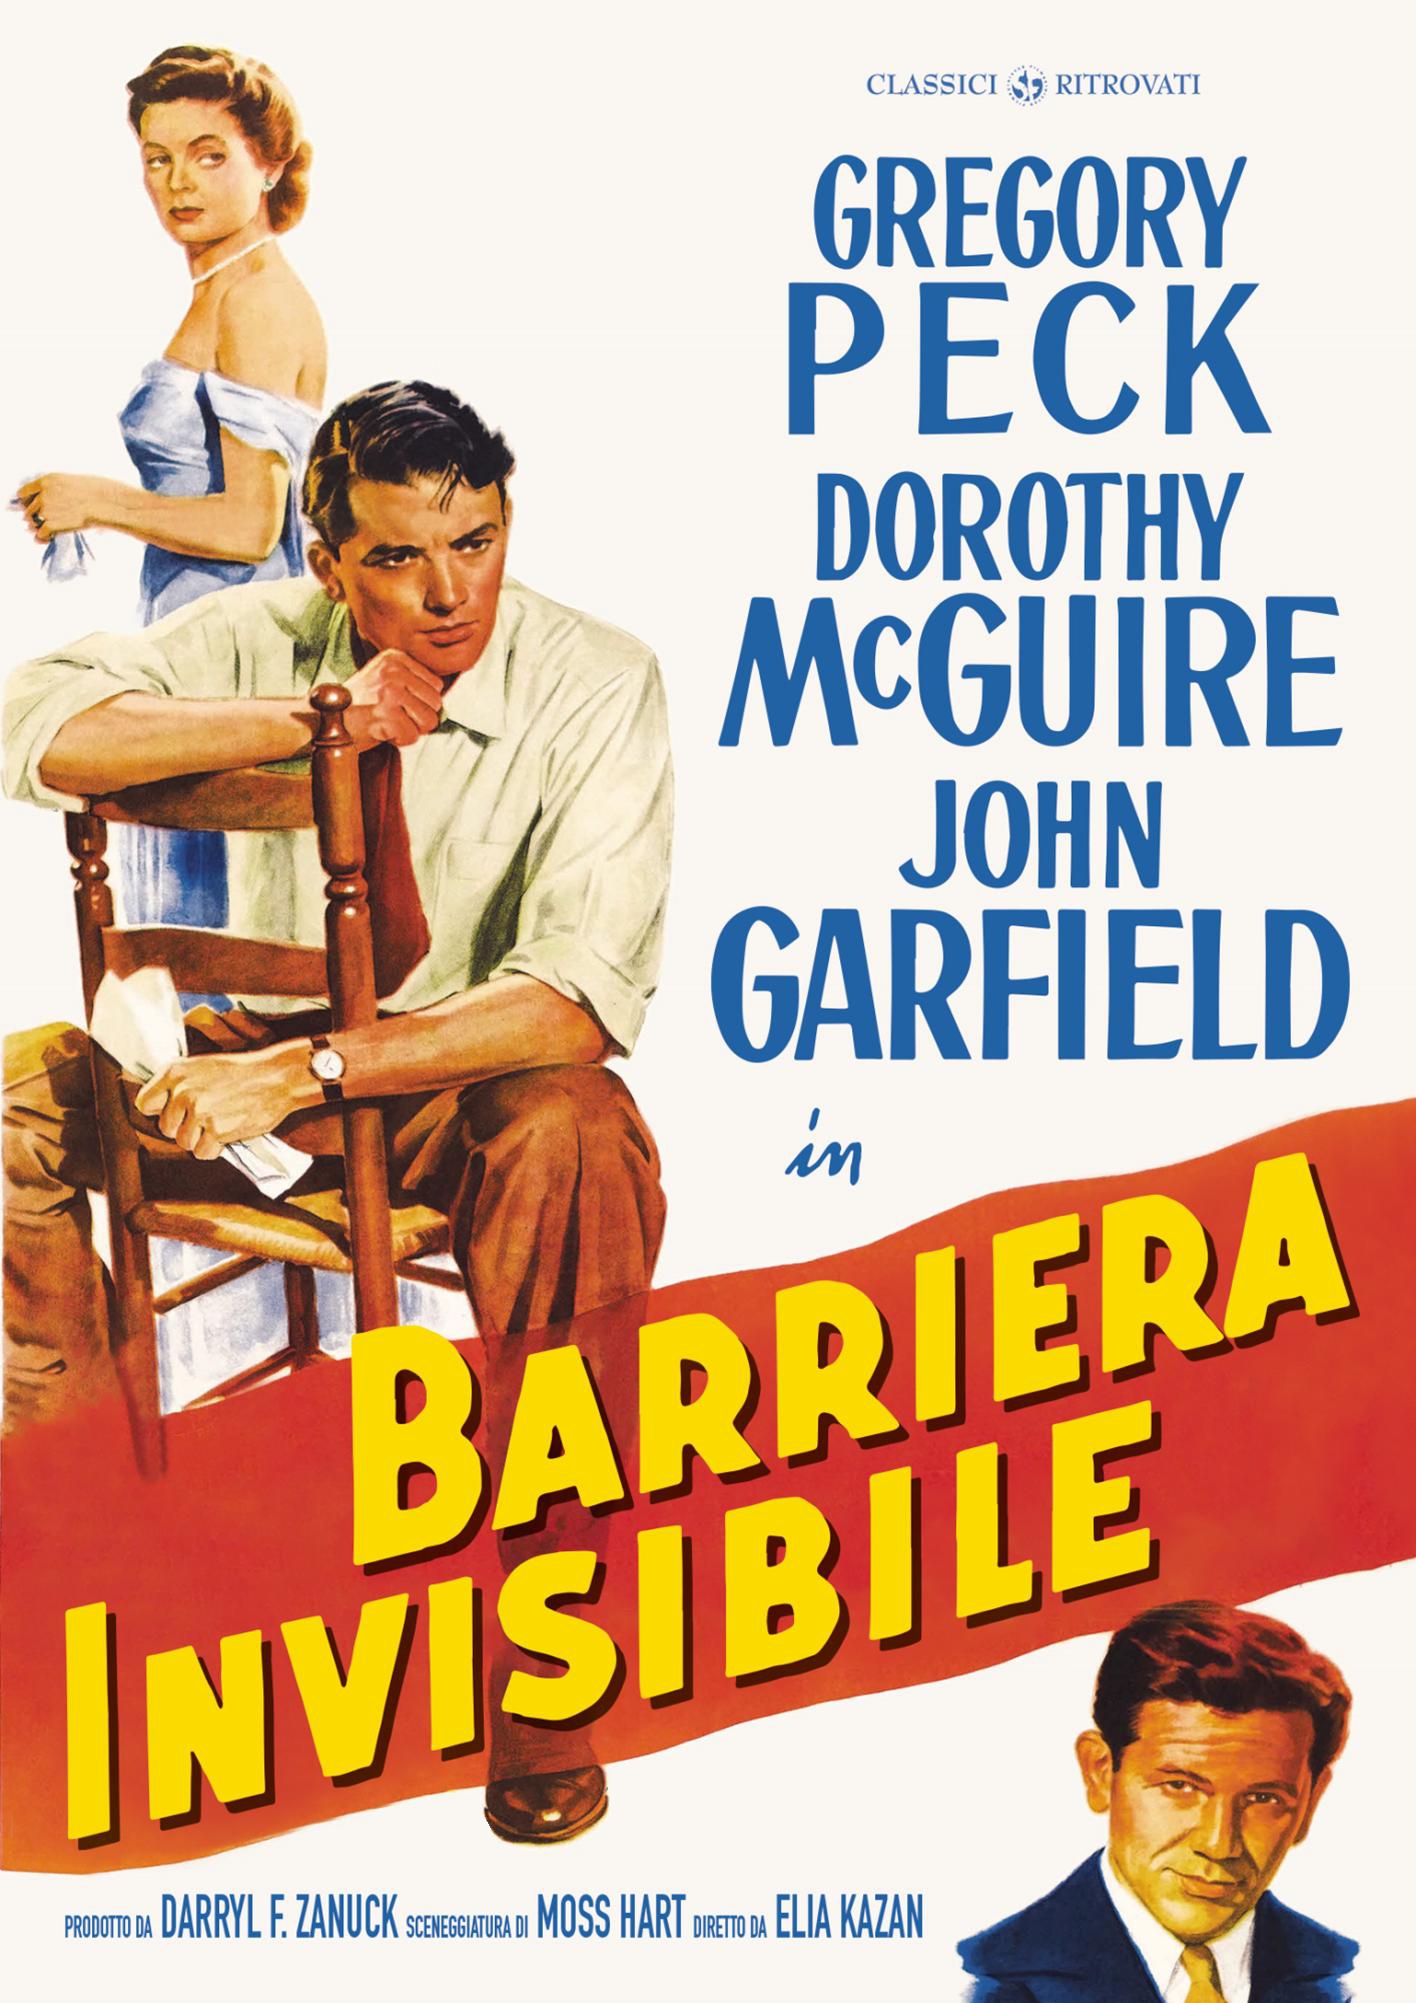 Barriera invisibile [B/N] [HD] (1947)